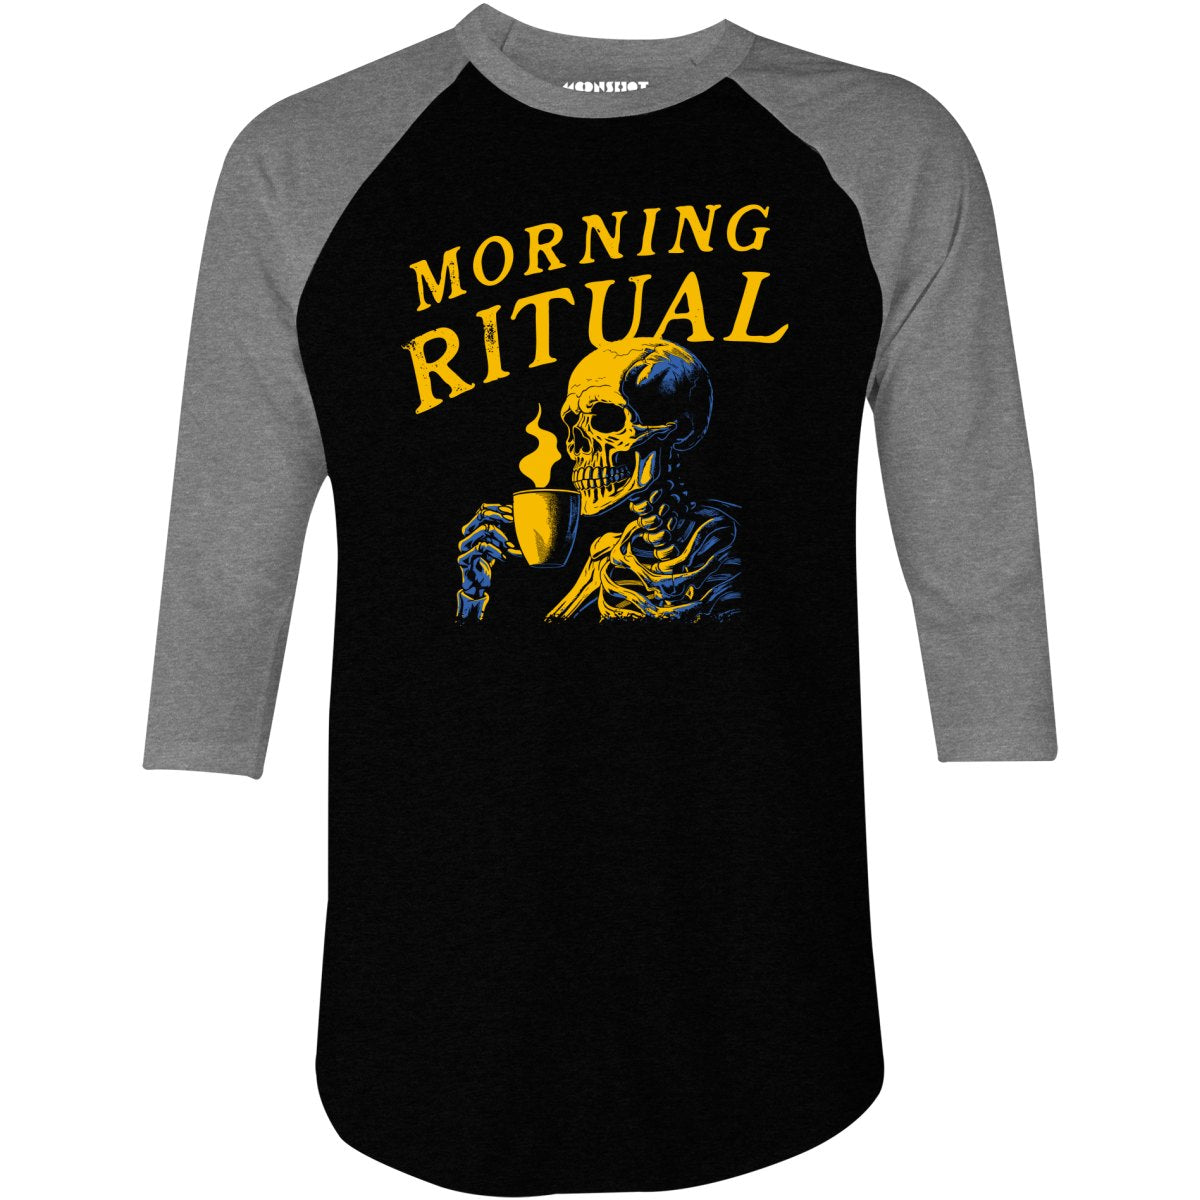 Morning Ritual - 3/4 Sleeve Raglan T-Shirt